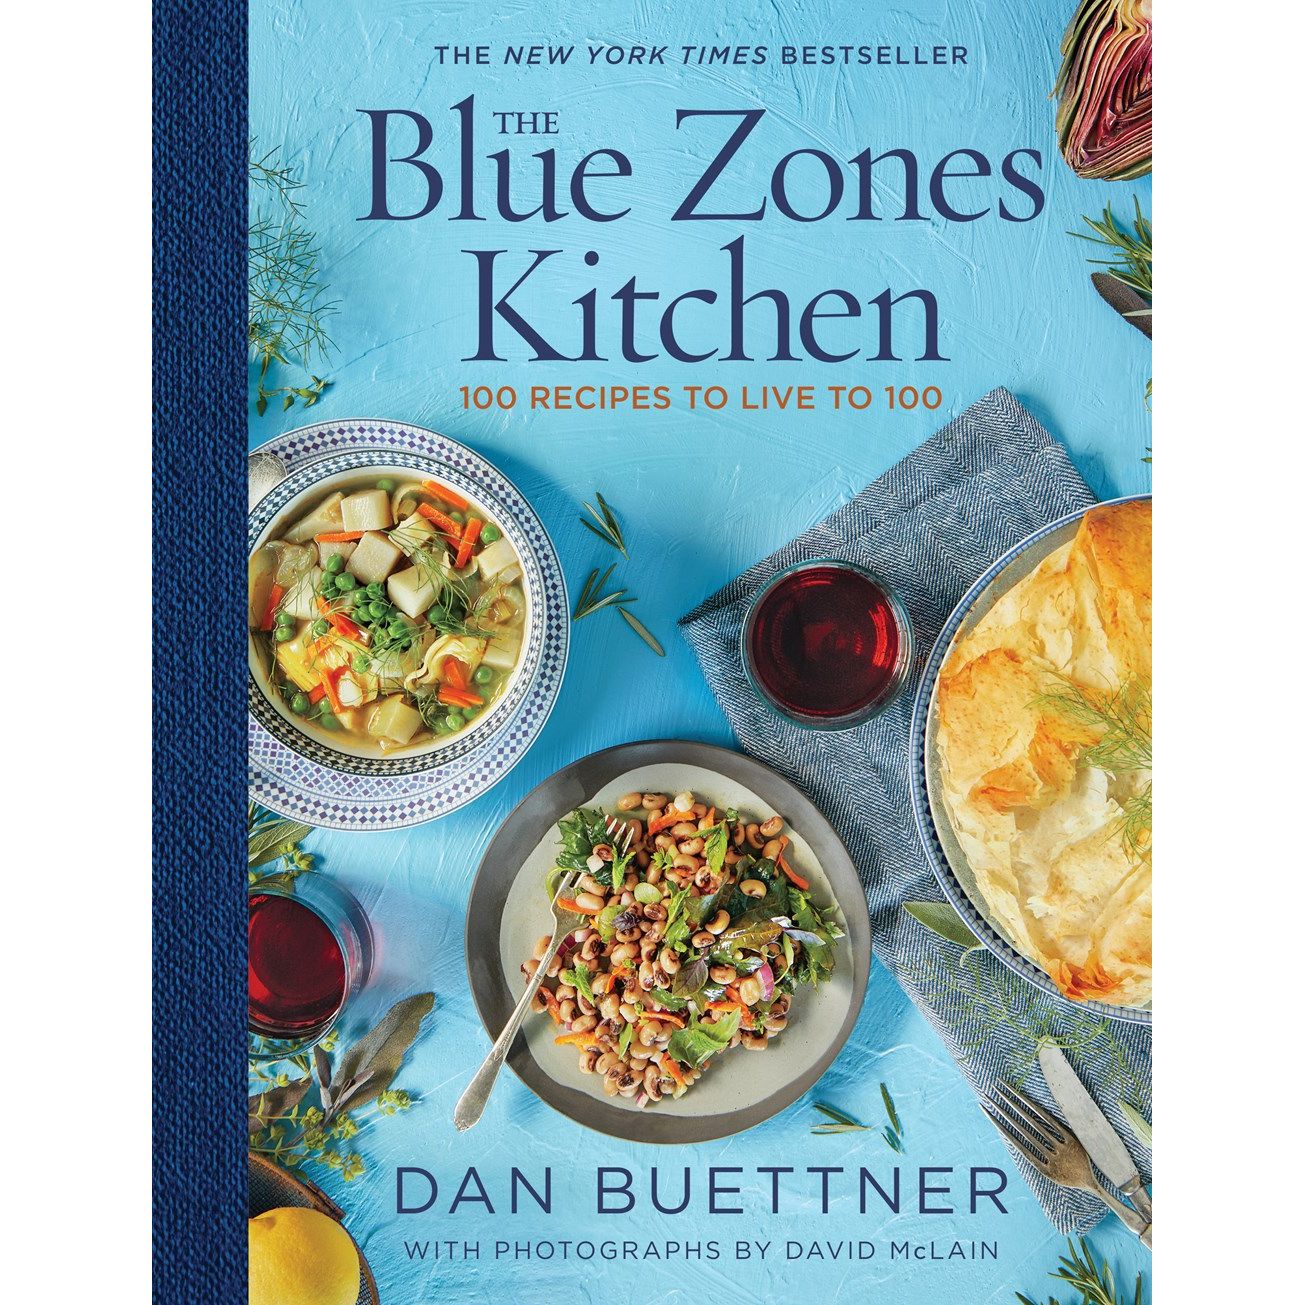 The Blue Zones Kitchen (Dan Buettner)